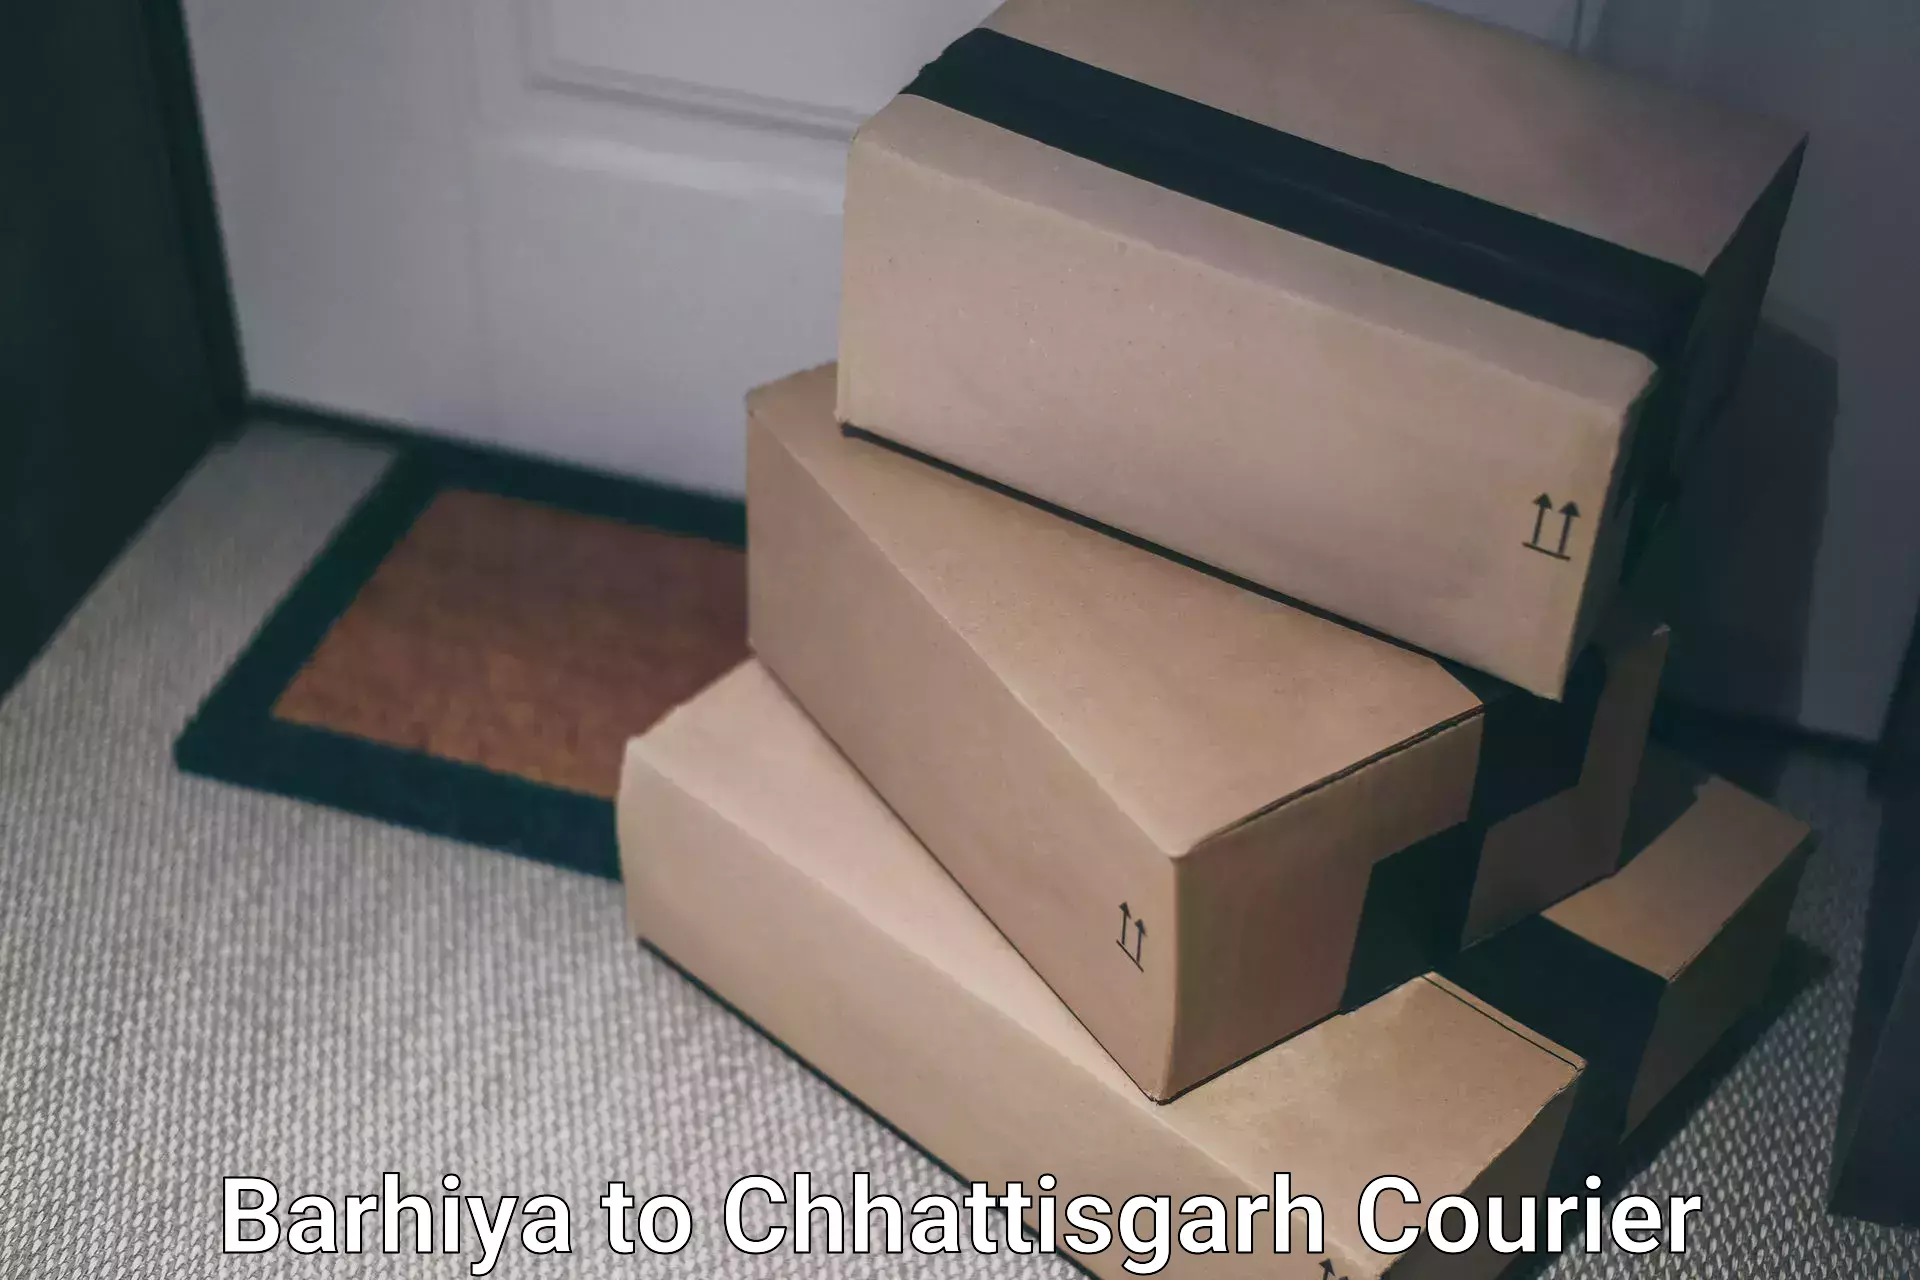 Speedy delivery service in Barhiya to Patna Chhattisgarh